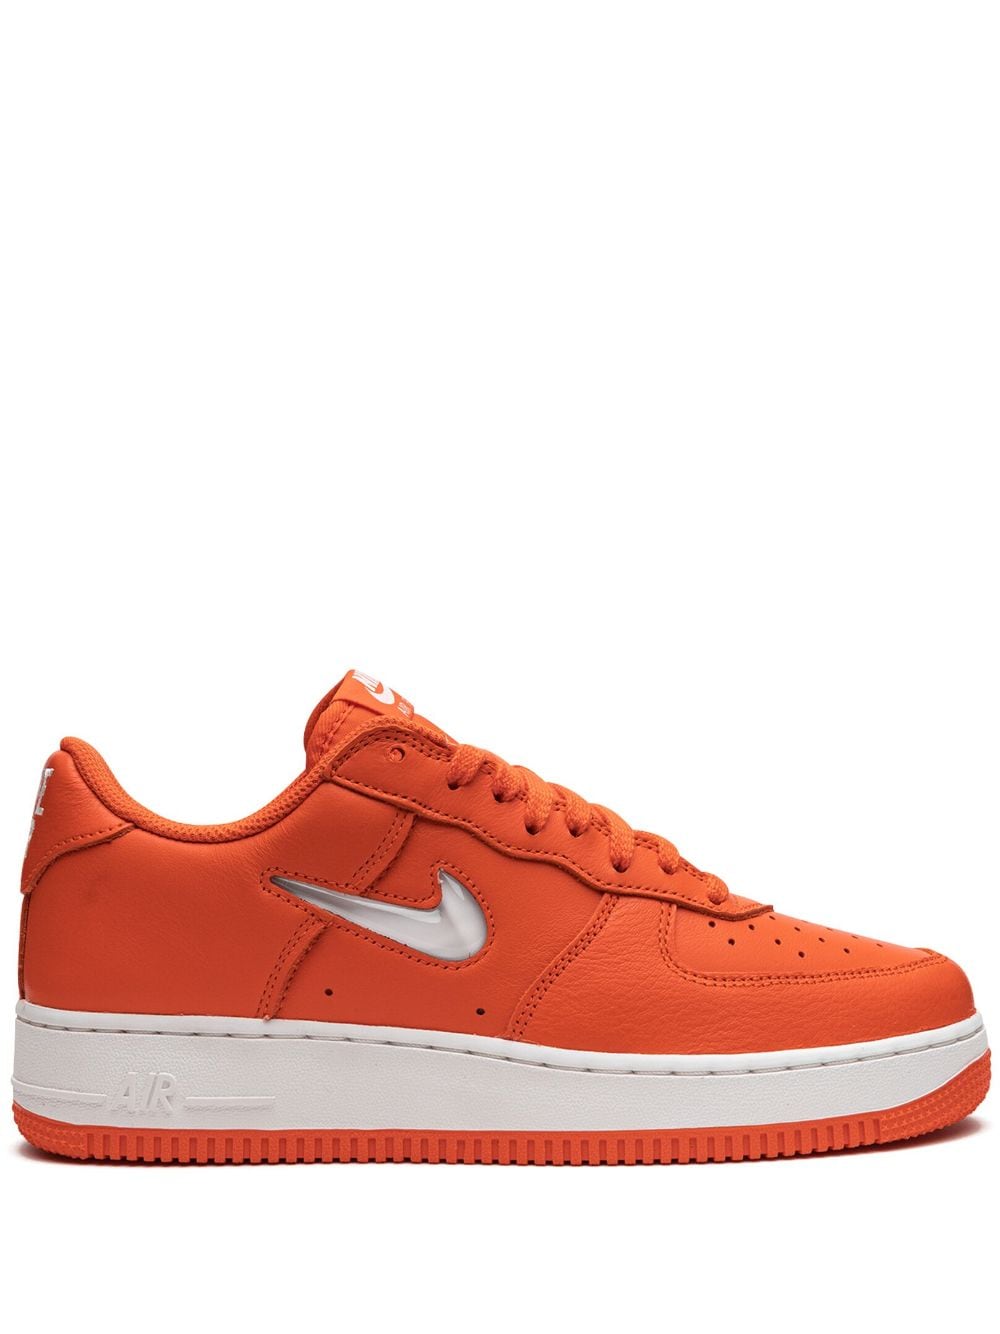 Nike Air Force 1 Low 40th Anniversary Edition Orange Jewel Sneakers von Nike